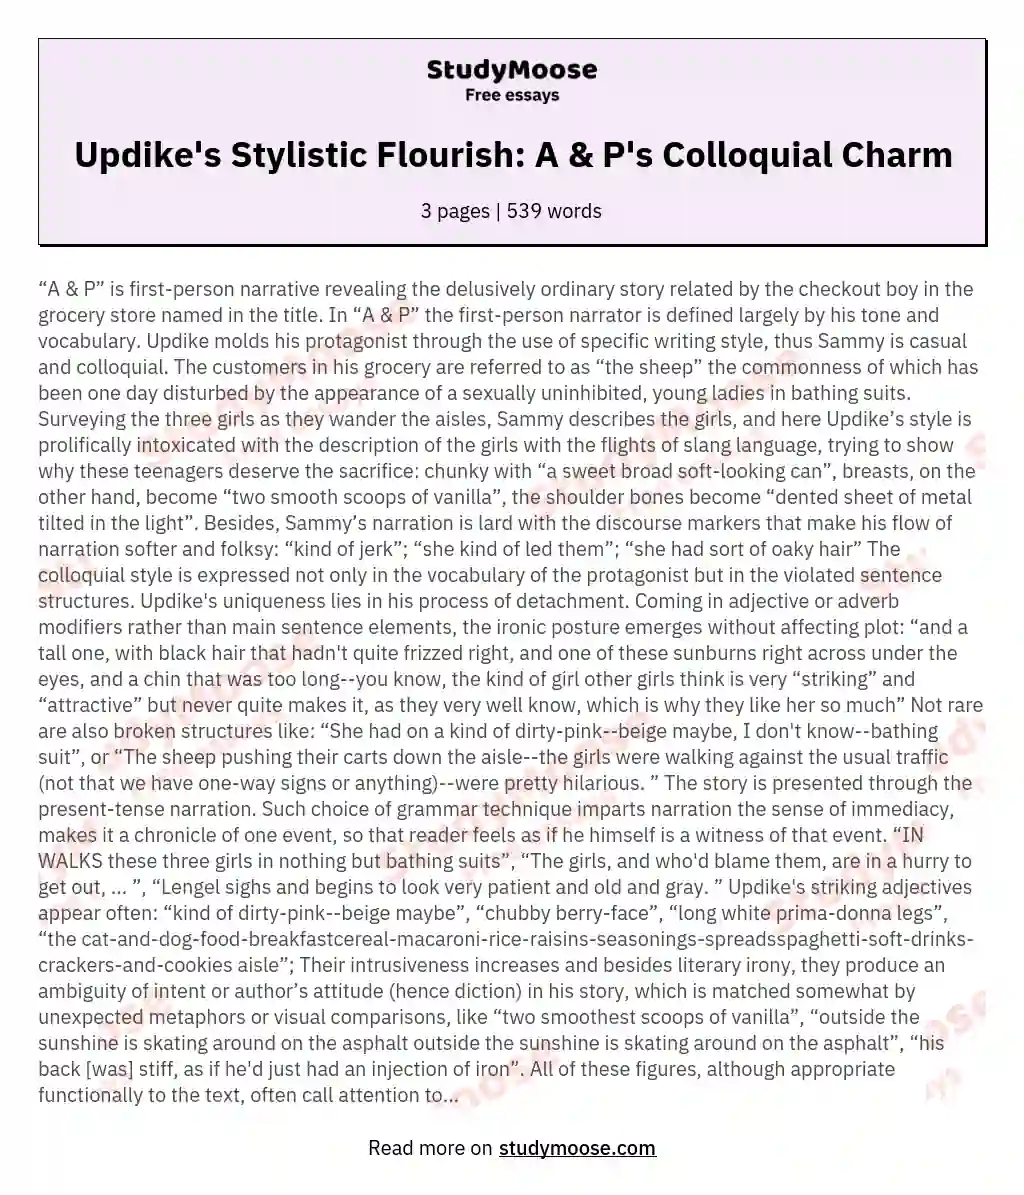 Updike's Stylistic Flourish: A & P's Colloquial Charm essay